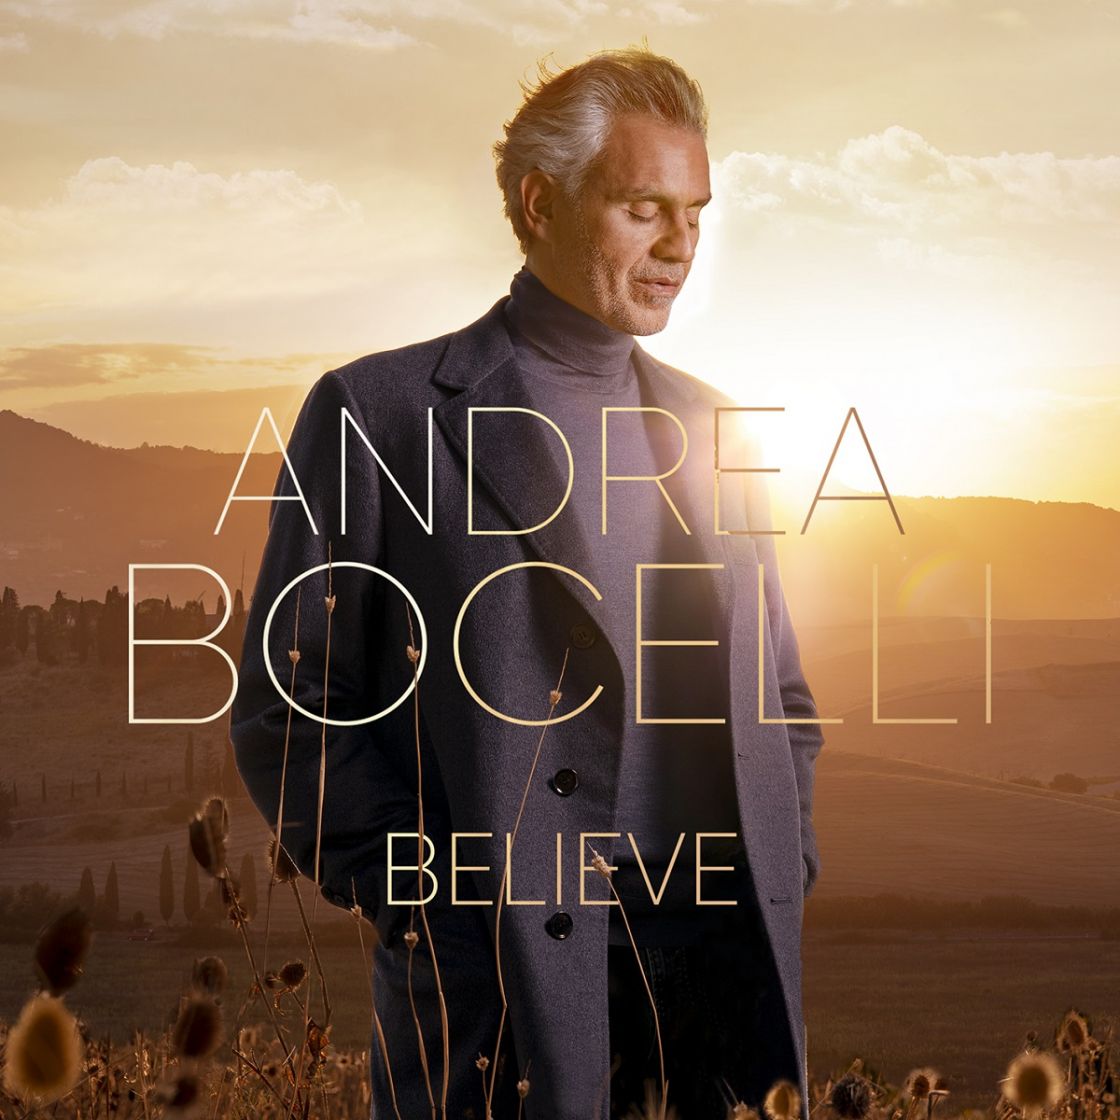 ANDREA BOCELLI - premiera albumu BELIEVE